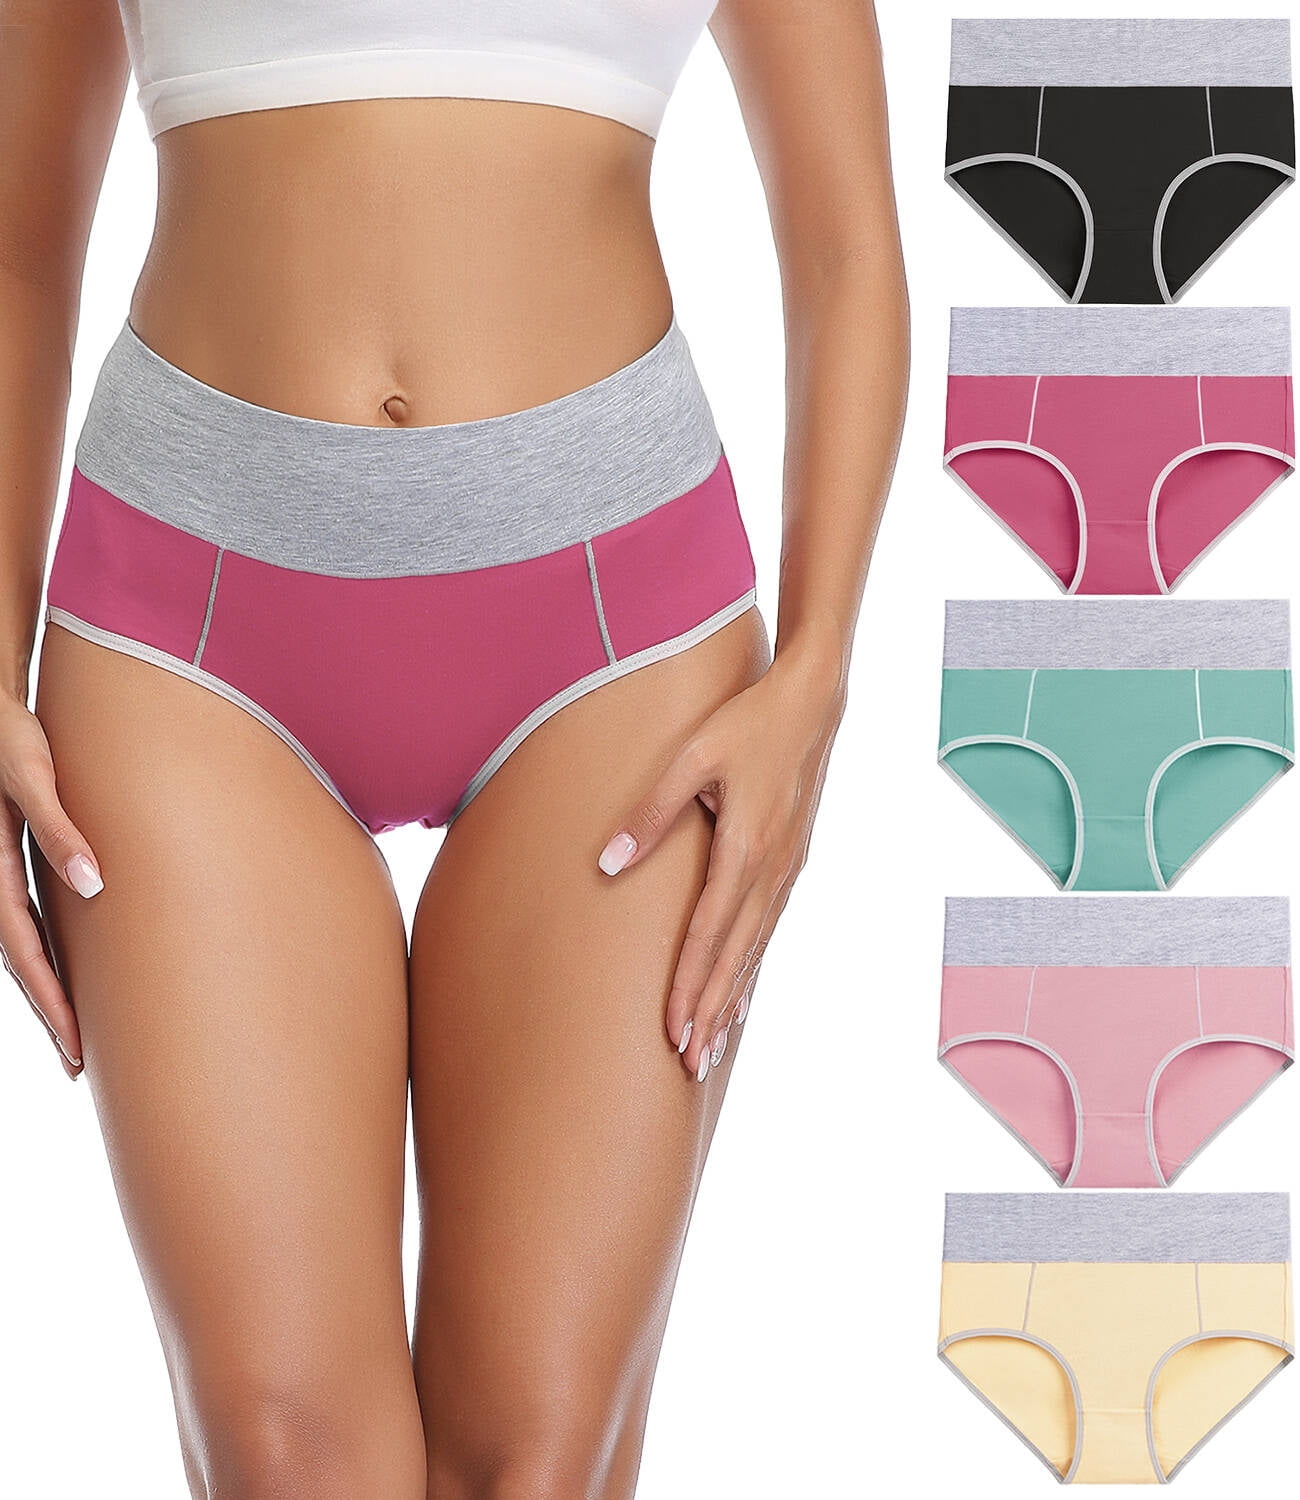 wirarpa Women's Cotton Underwear High Waist Briefs Panties Full Coverage  Underpants 5 Pack Sizes 5-10 